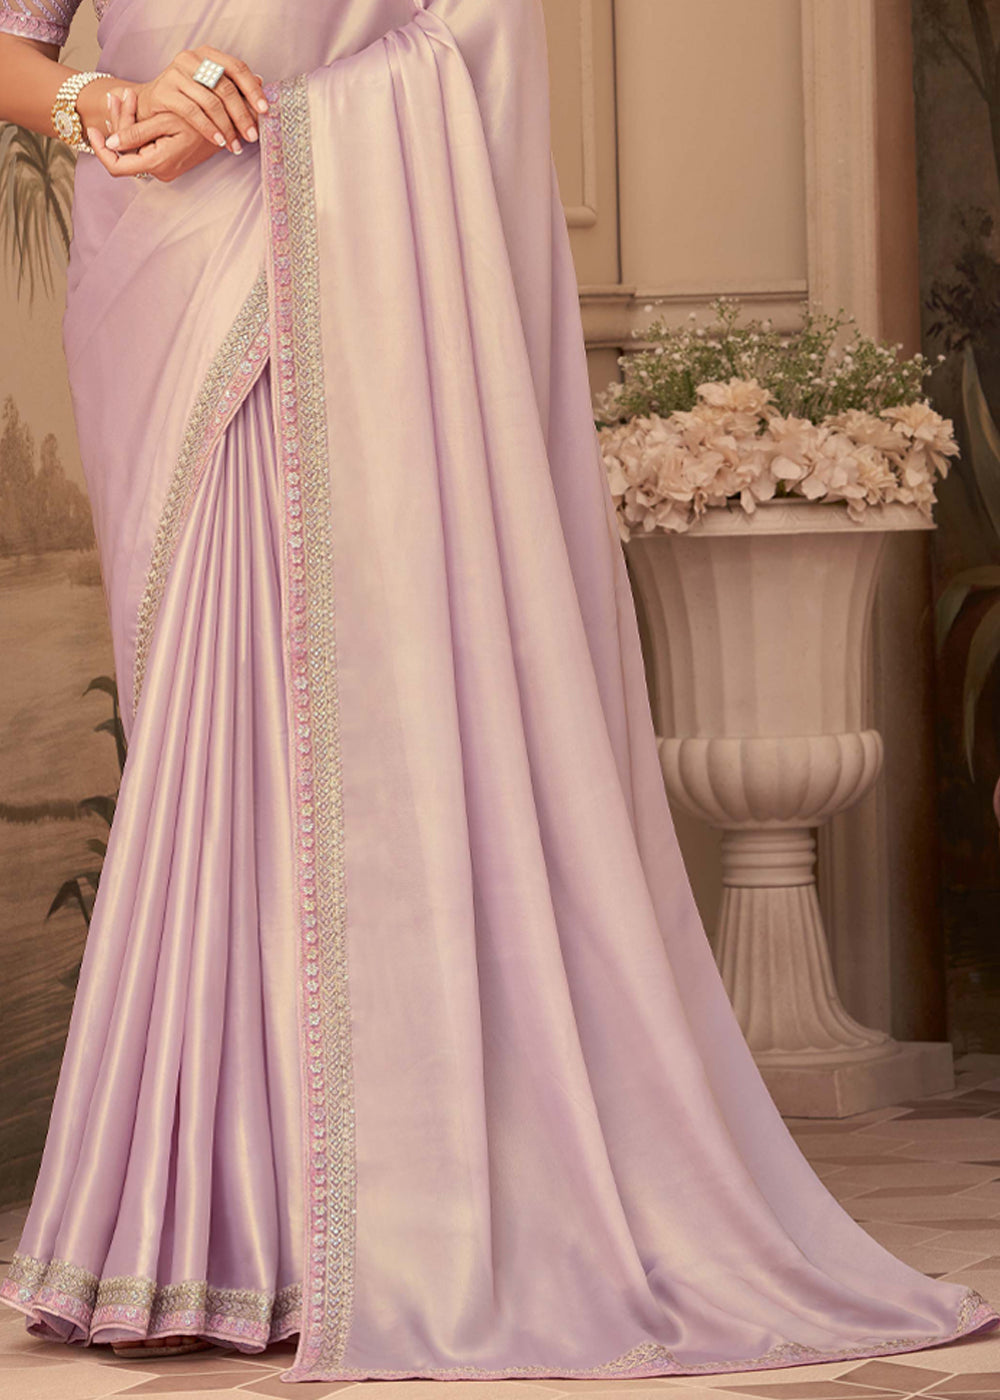 Buy MySilkLove Rose Fog Purple Georgette Designer Saree with Embroidered Blouse Online